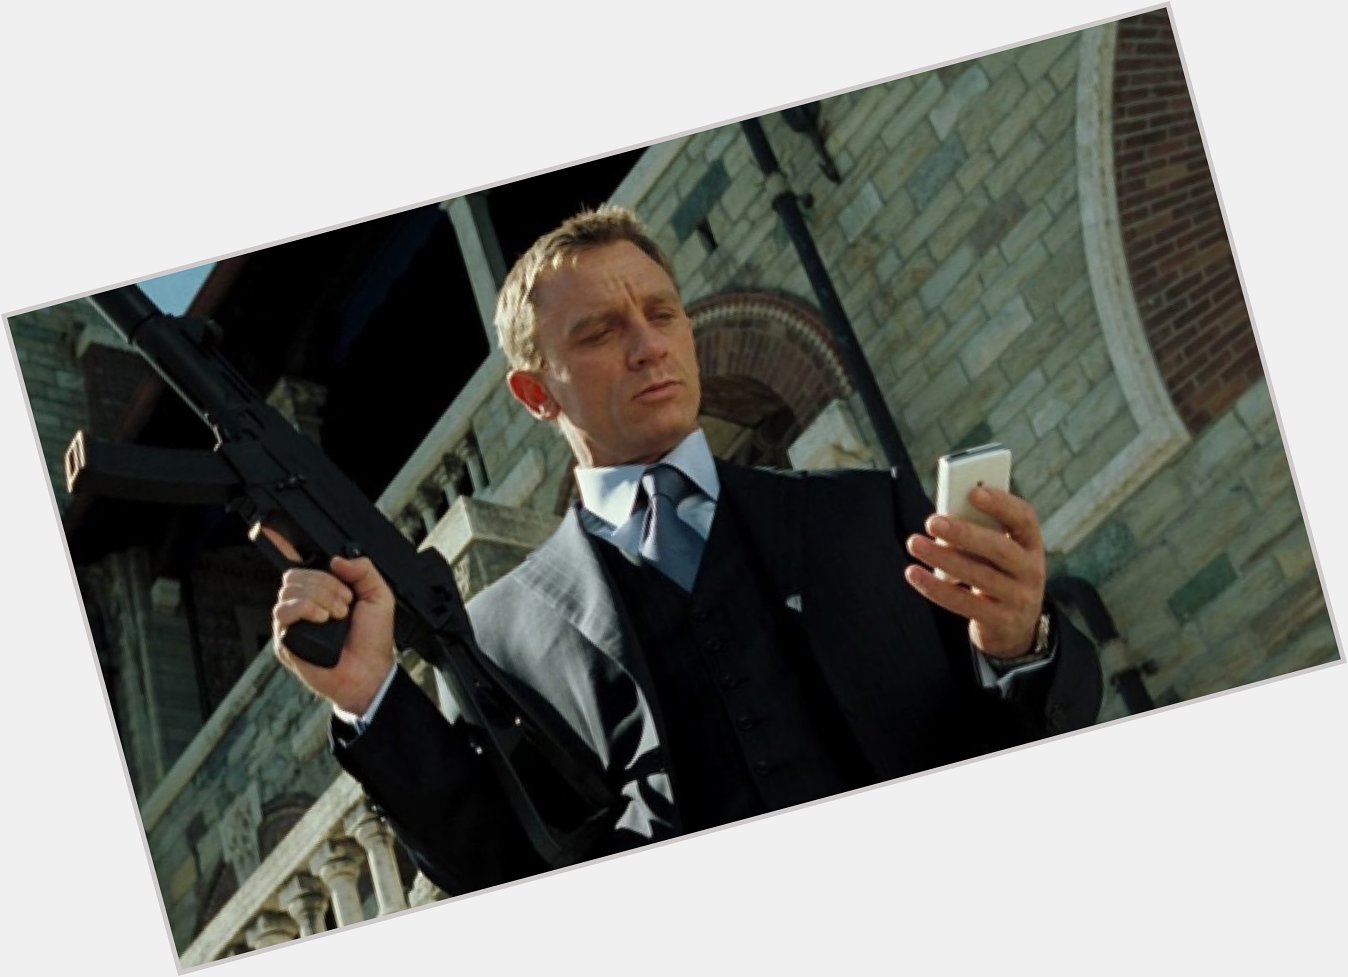 Happy 53rd Birthday to Mr. Bond himself, Daniel Craig!  